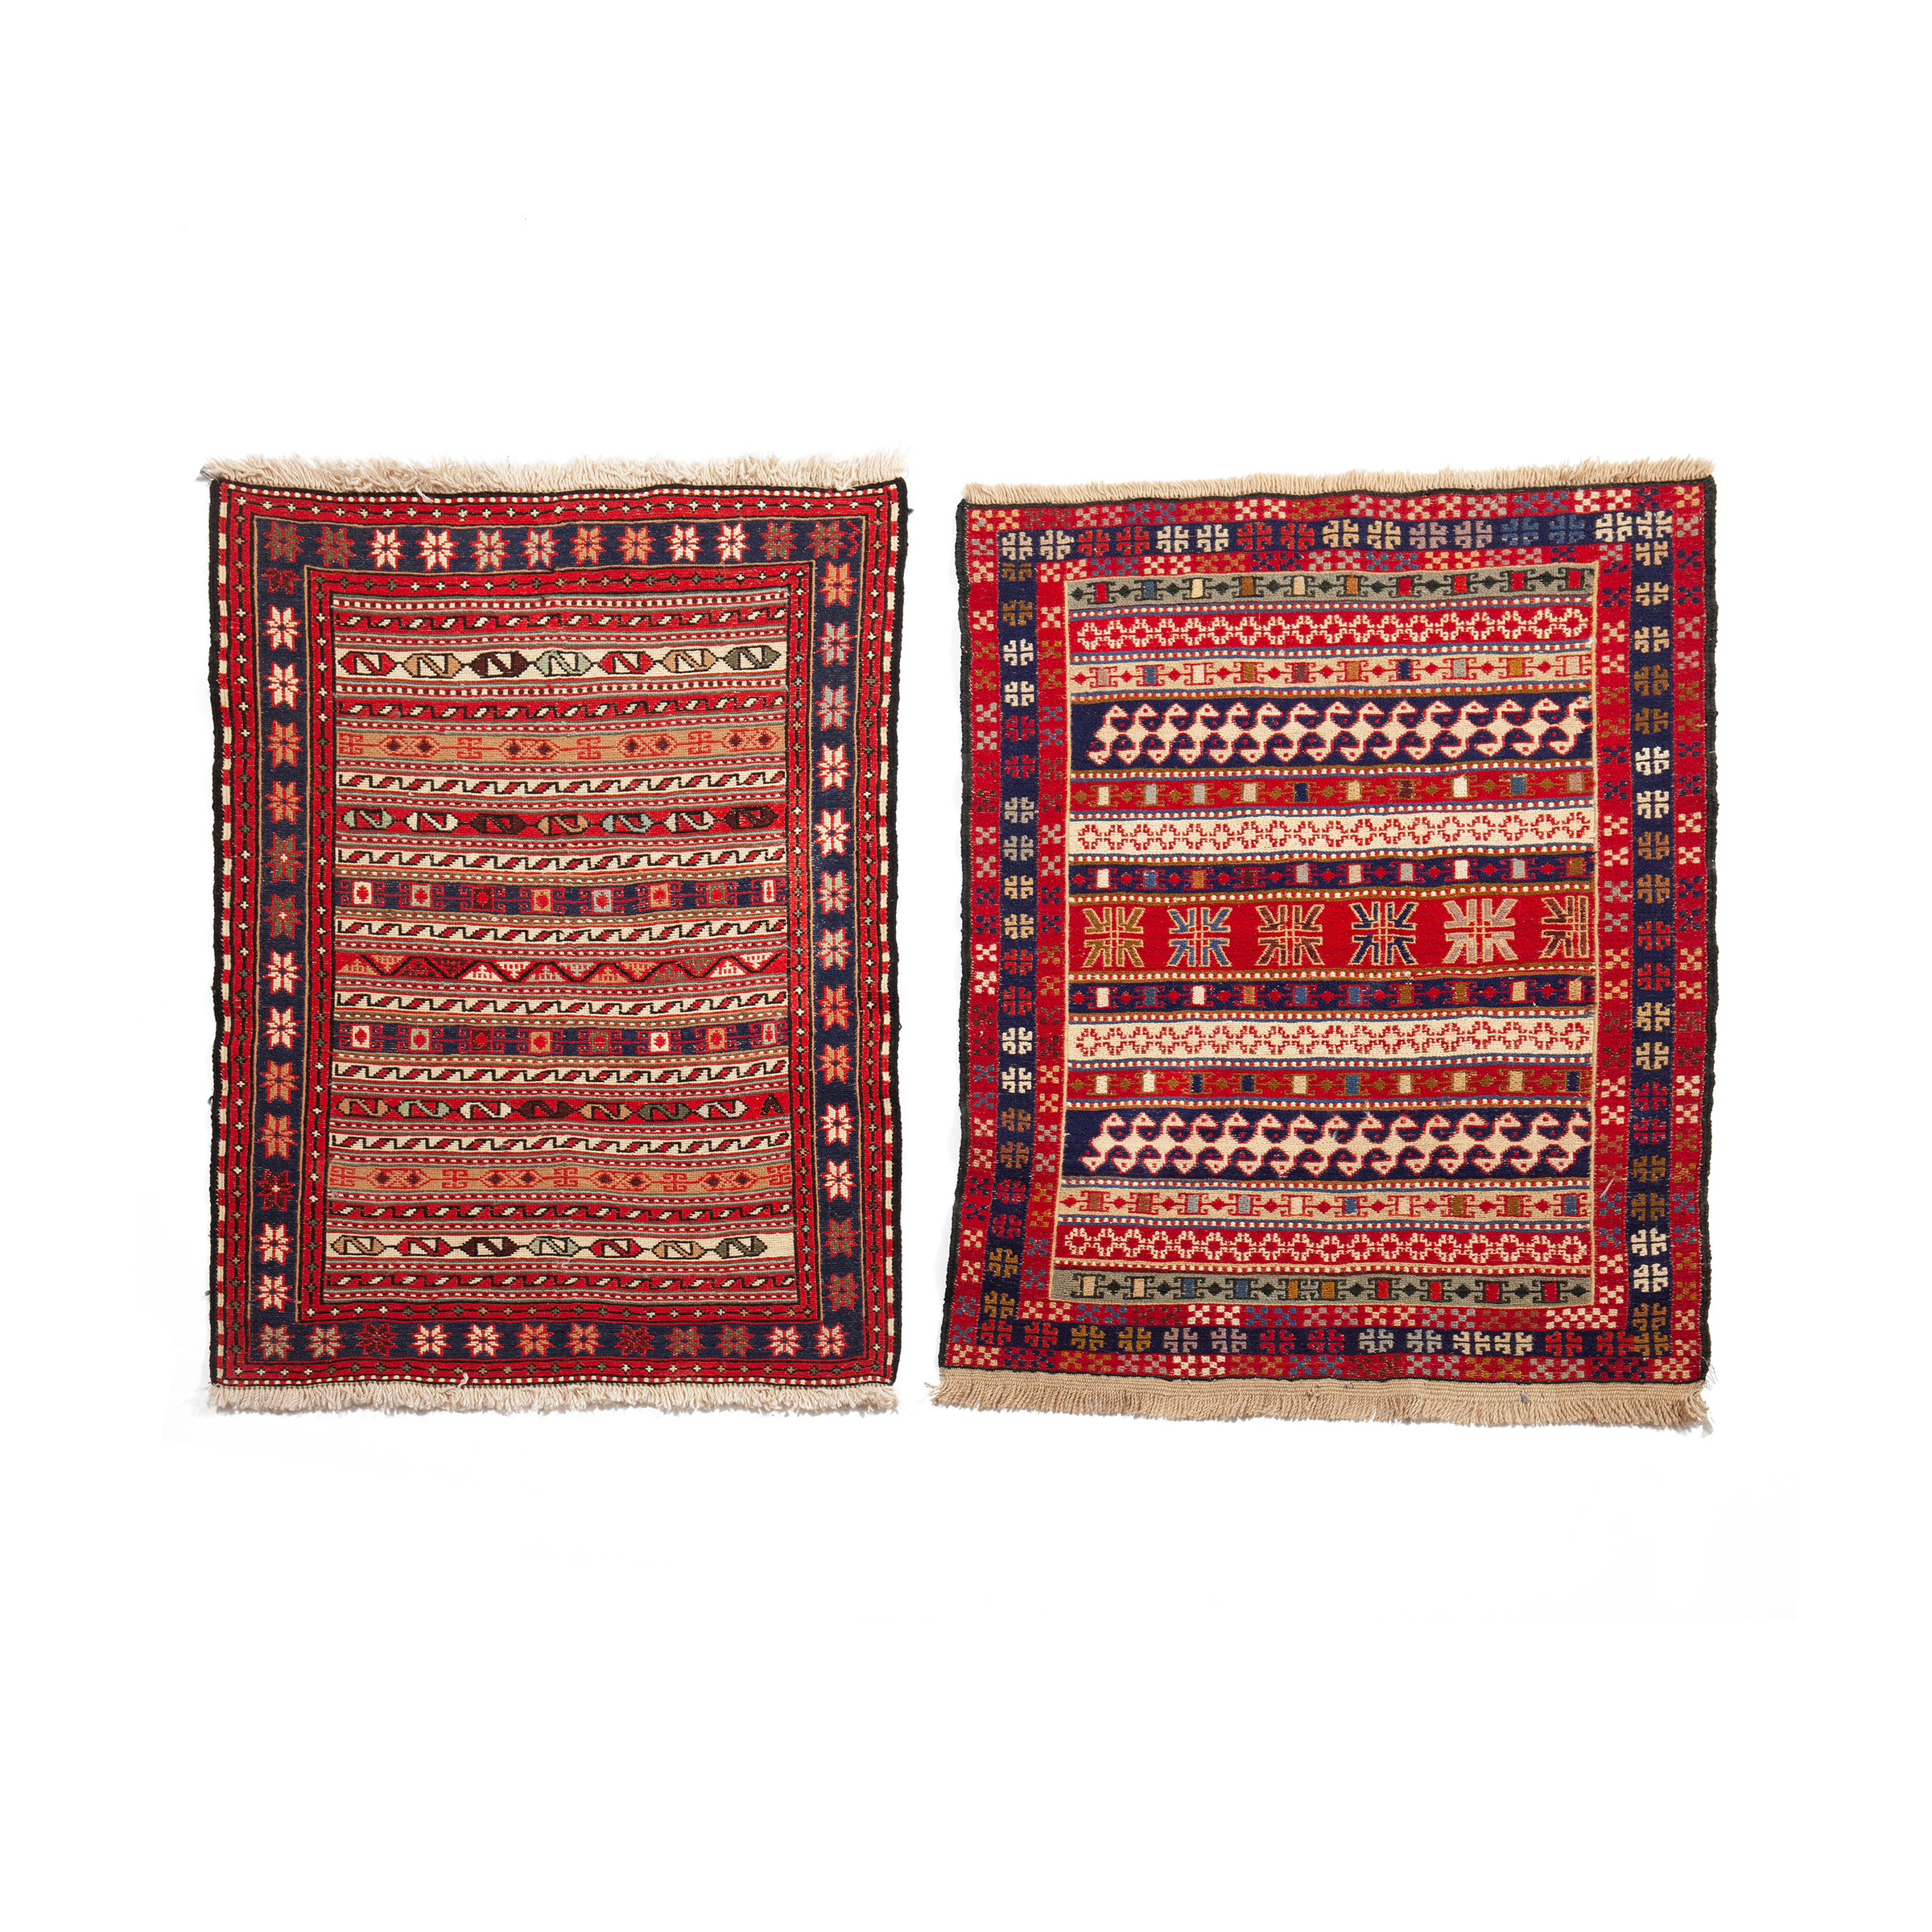 Two Soumak Rugs, Caucasian, mid 20th century